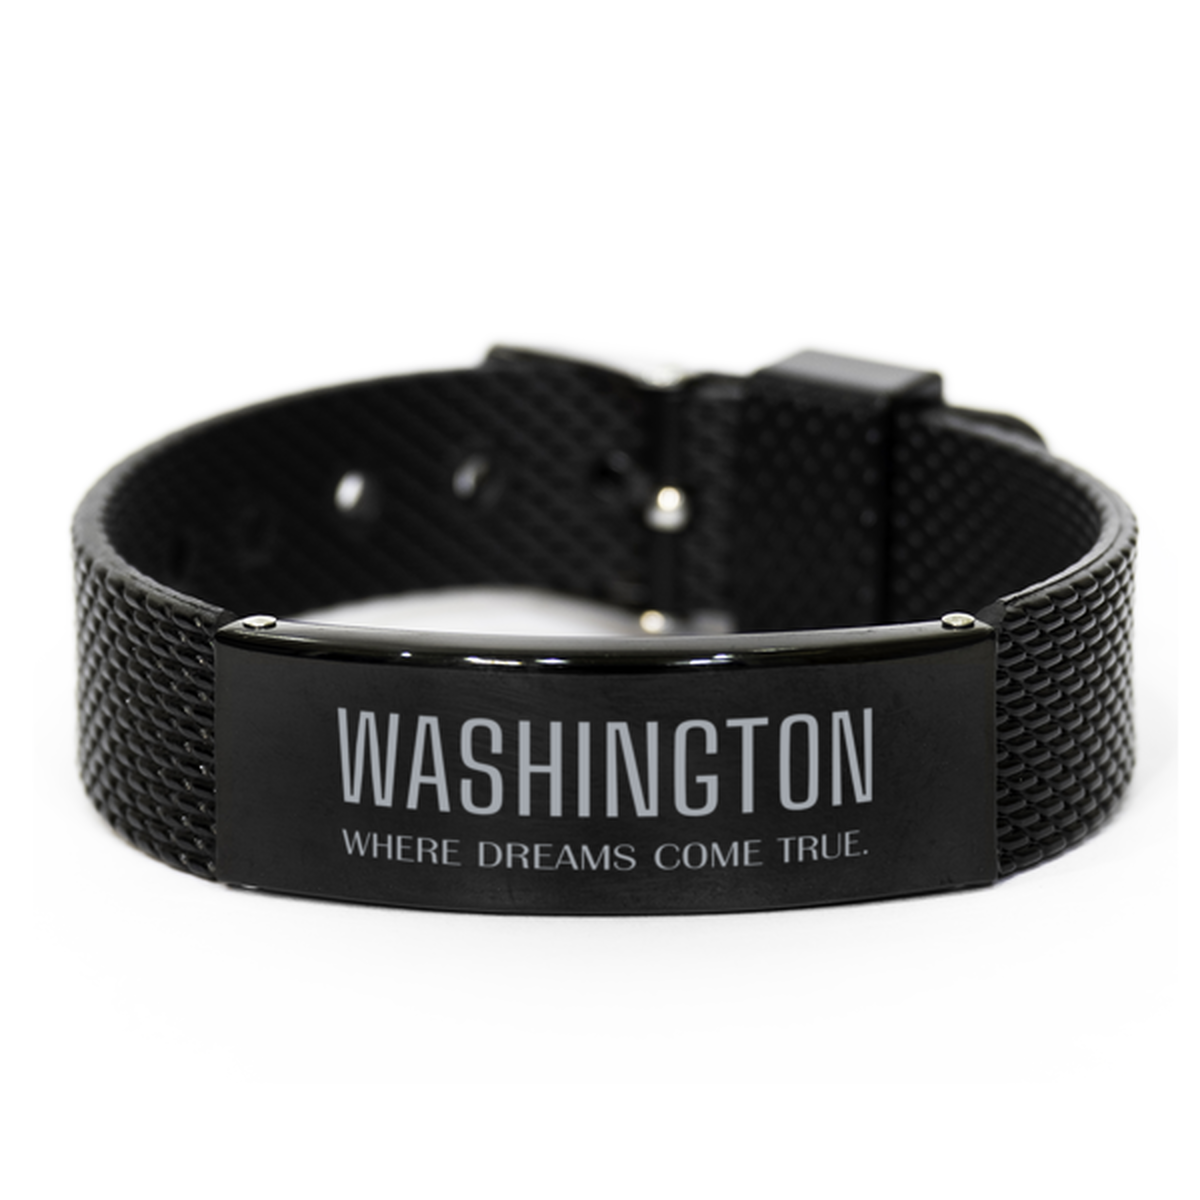 Love Washington State Black Shark Mesh Bracelet, Washington Where dreams come true, Birthday Inspirational Gifts For Washington Men, Women, Friends